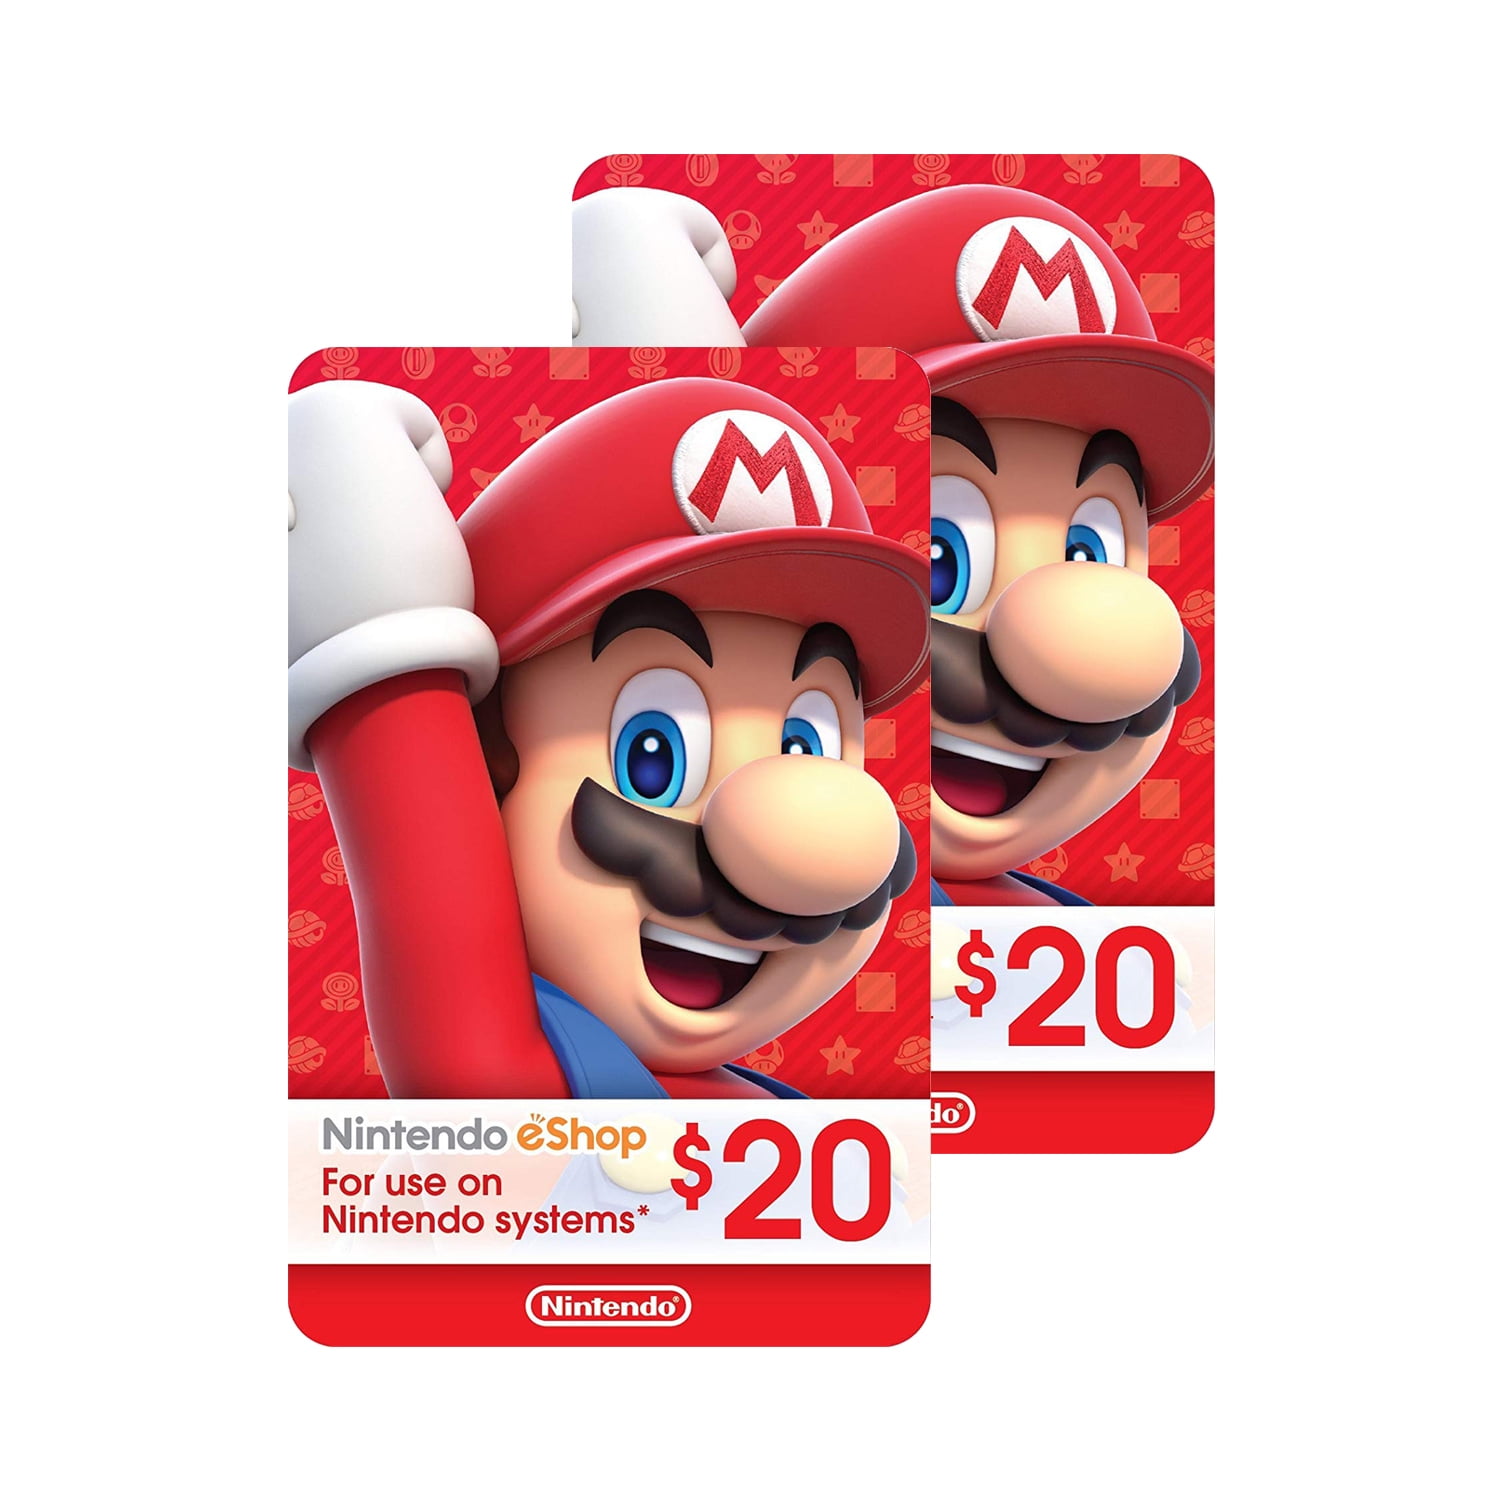 Nintendo Eshop Card Working Flash Sales, 60% | www.logistica360.pe